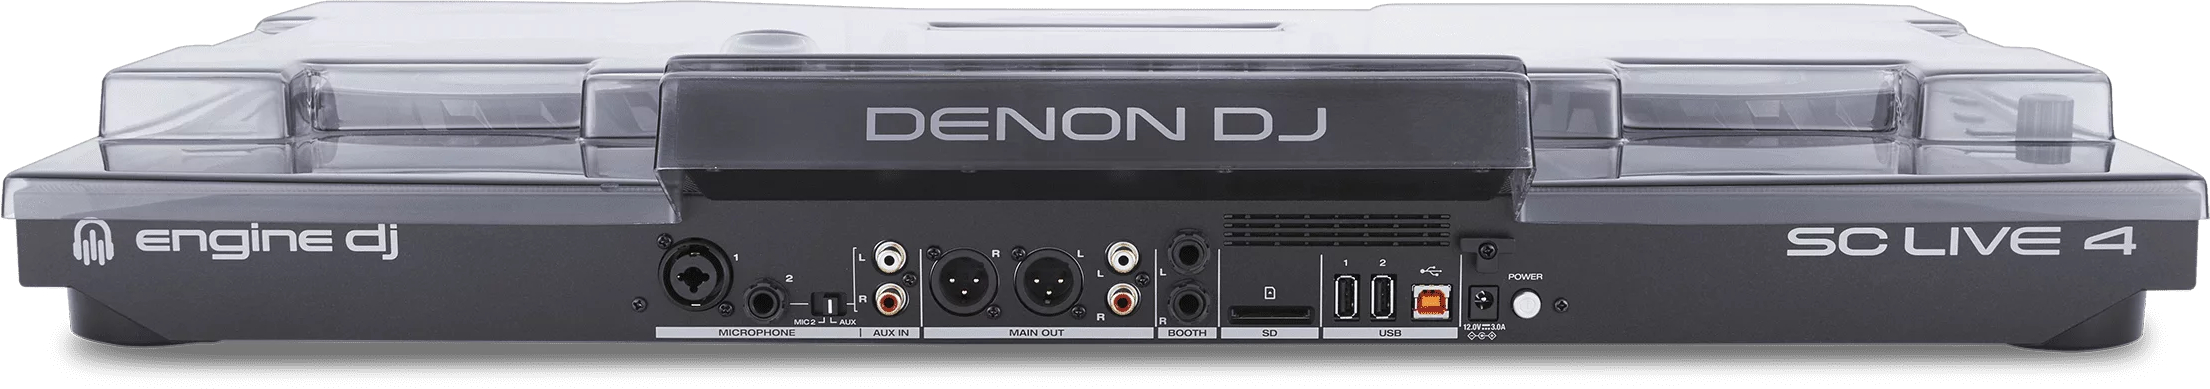 Decksaver Denon Dj Sc Live 4 Cover - DJ-Tasche - Variation 2